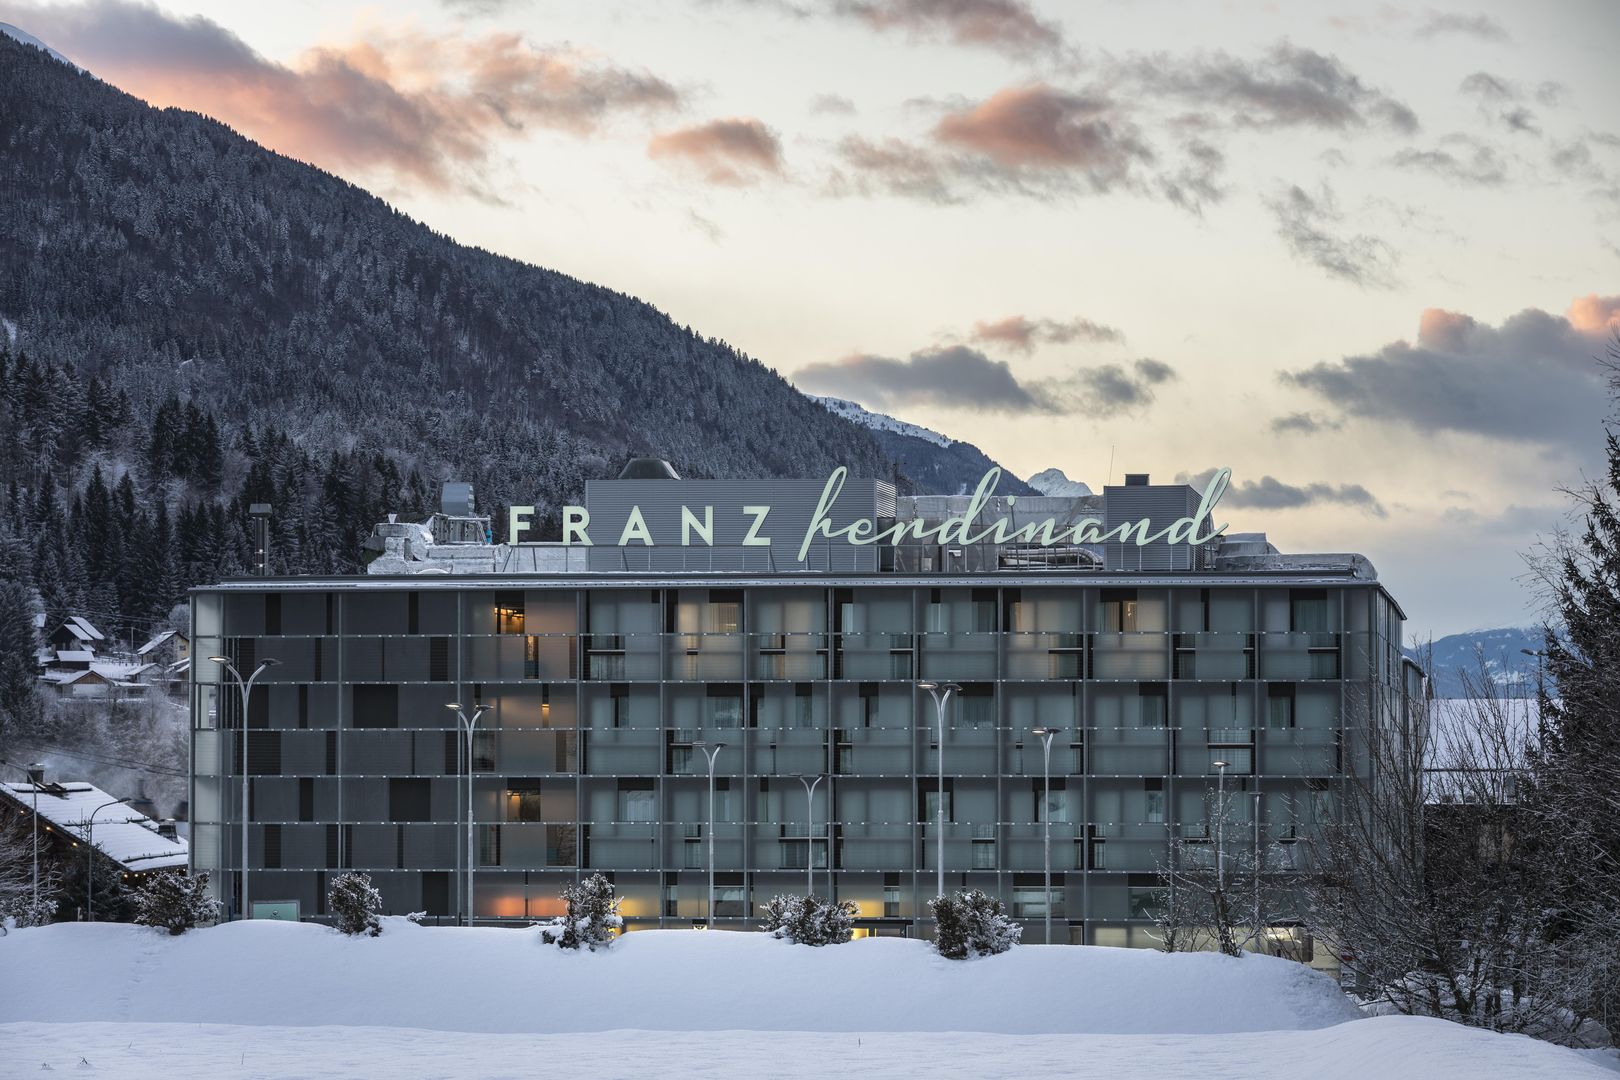 Slide1 - FRANZ ferdinand Mountain Resort Nassfeld